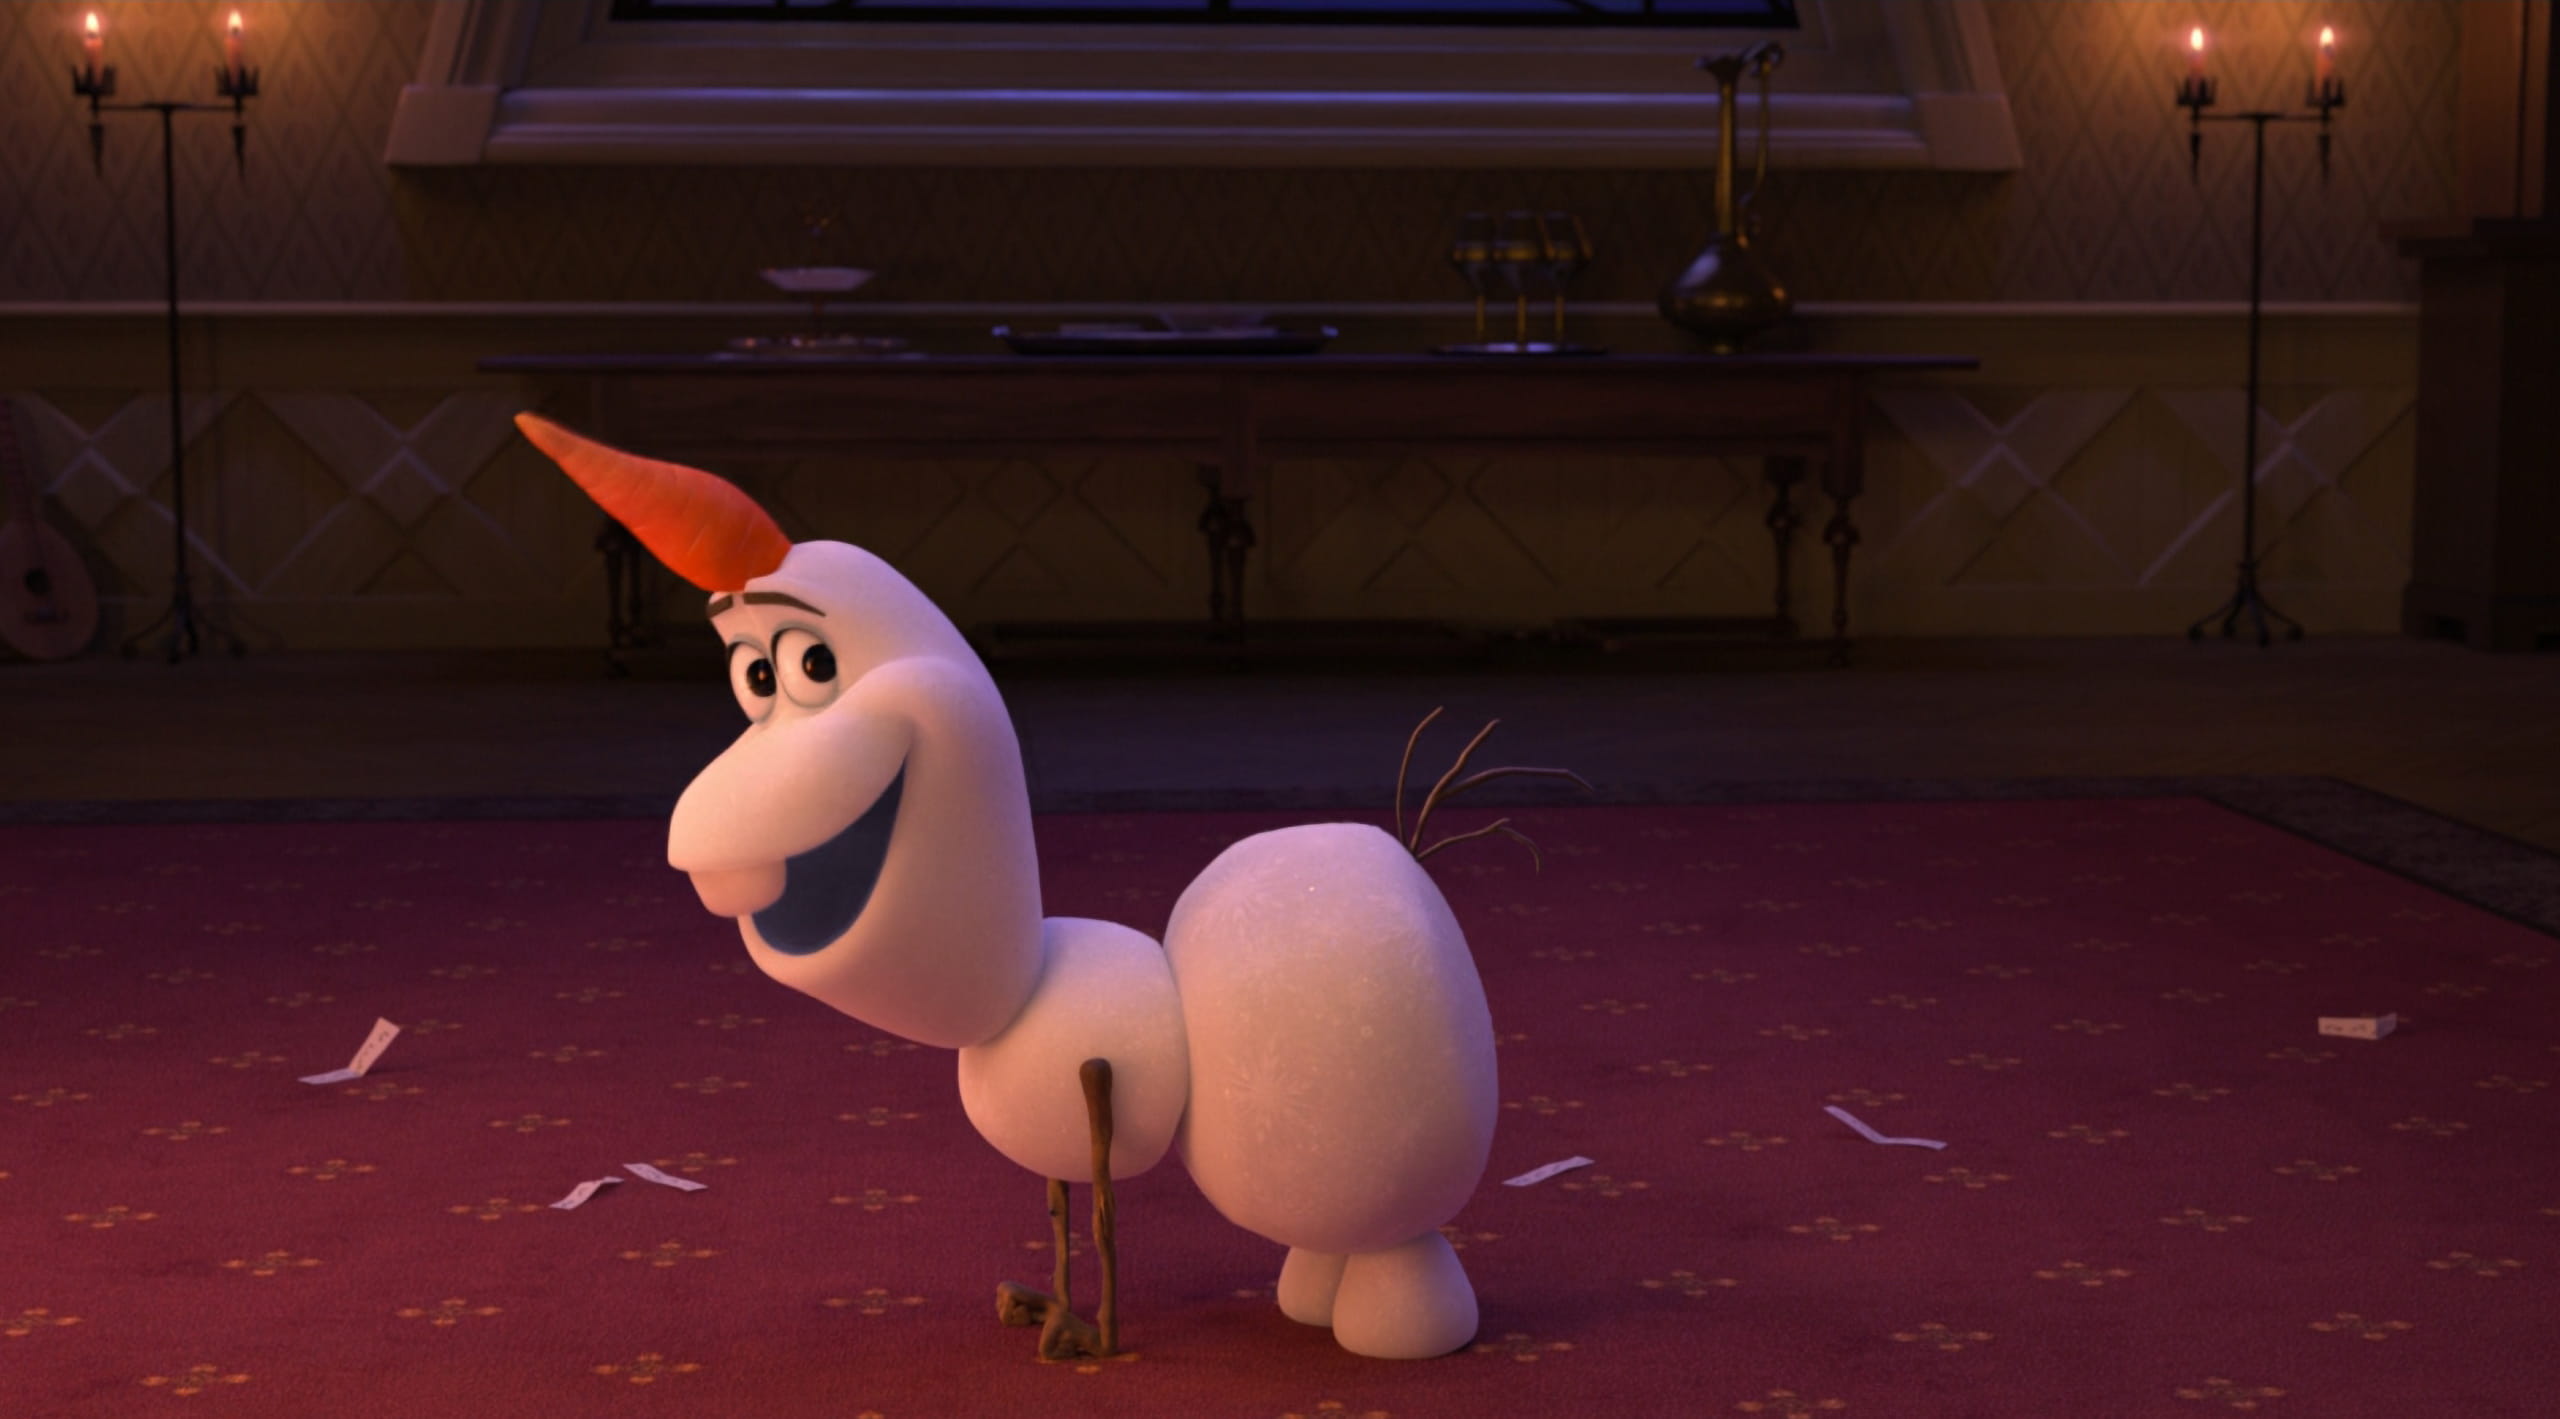 Olaf rearranging his body to unicorn